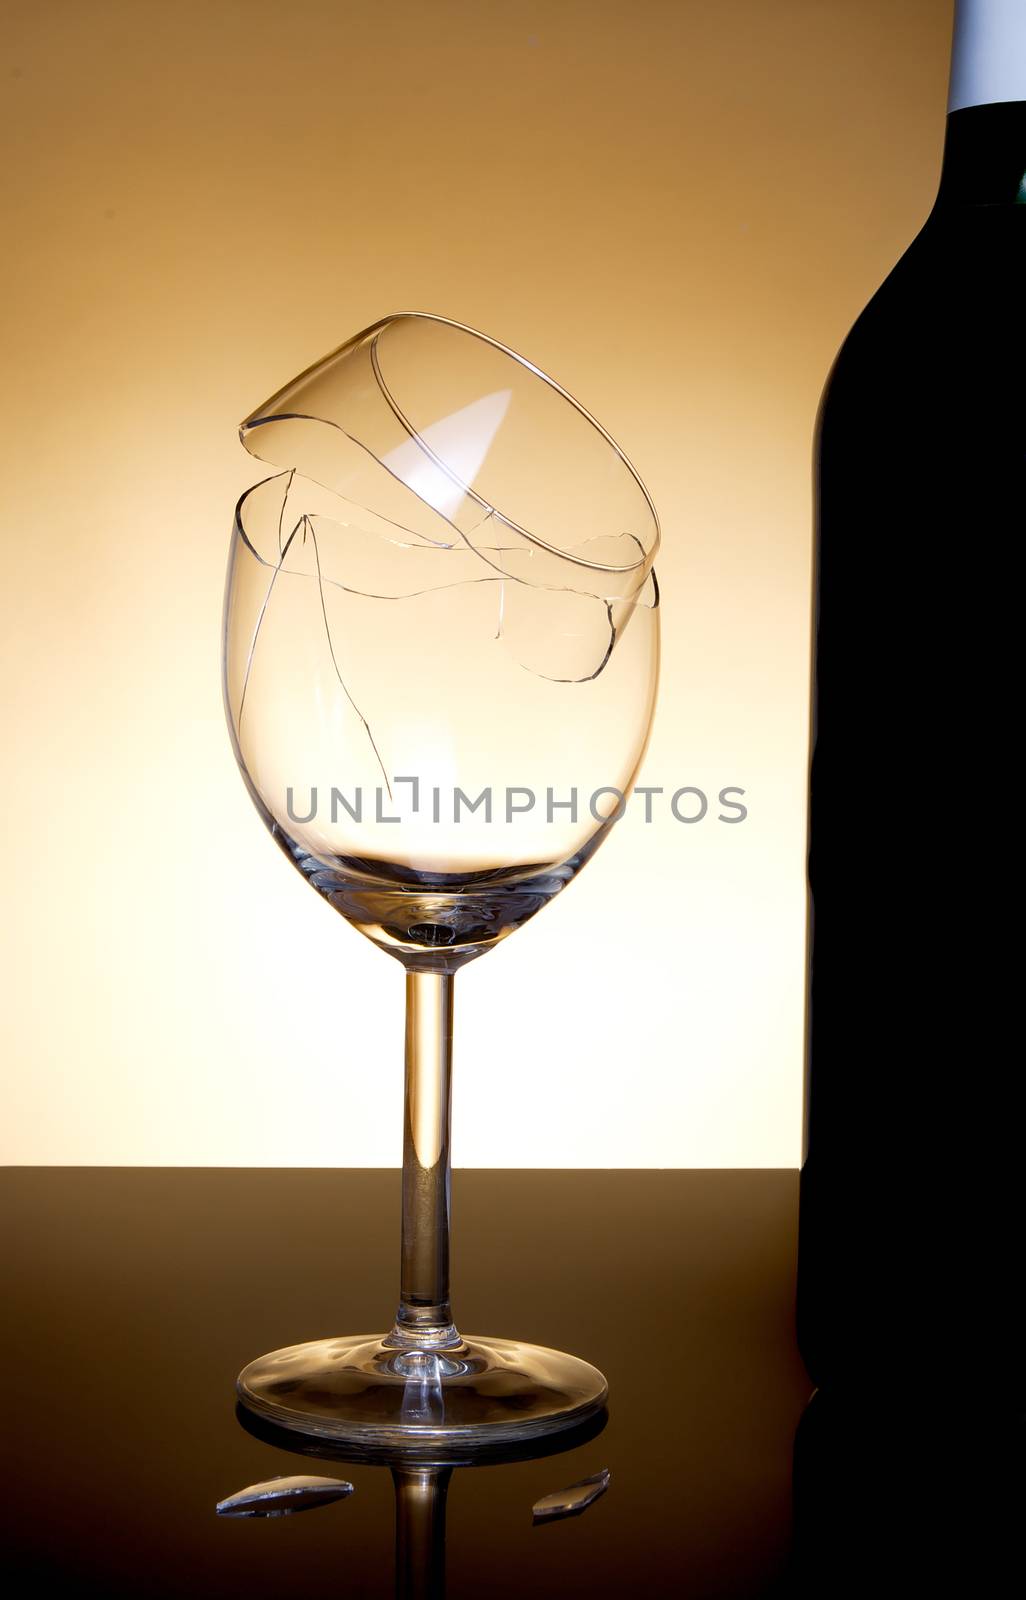 Vine bottle and broken glass on orange background by anderm